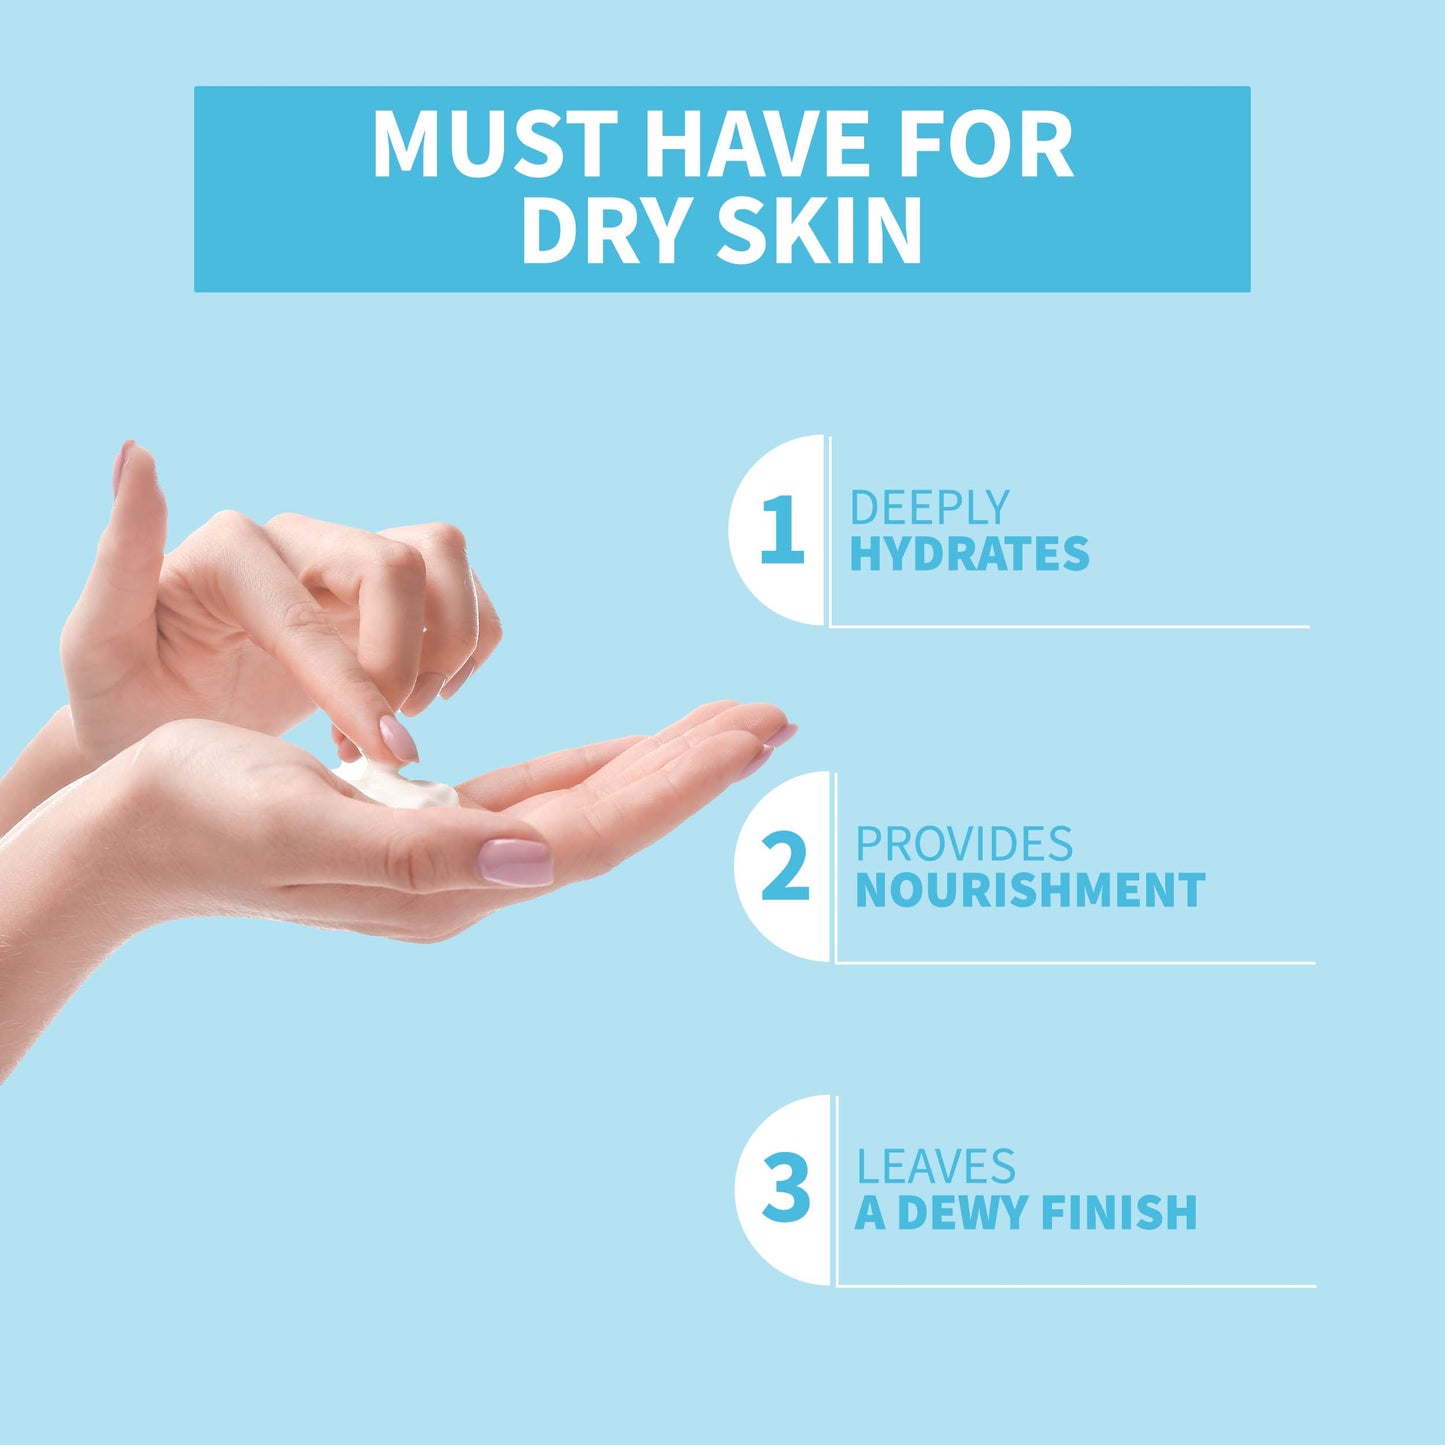 DermDoc 1% Pure Hyaluronic Acid Face Cream For Skin Moisturization (50g)